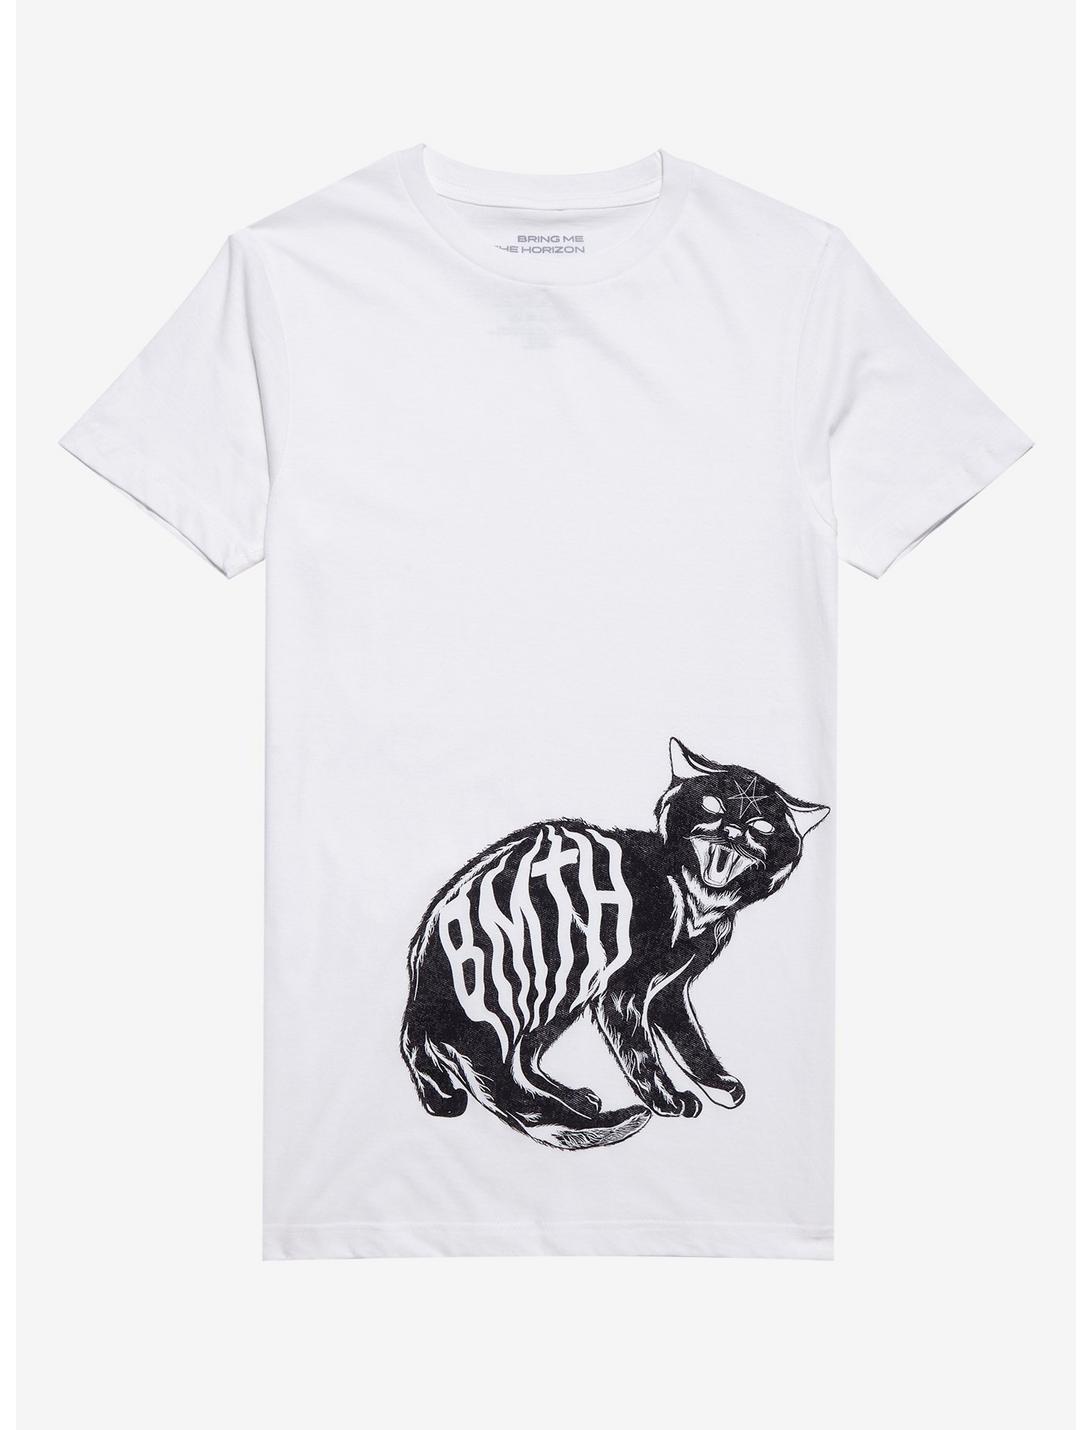 Bring Me The Horizon Black Cat Boyfriend Fit Girls T-Shirt | Hot Topic